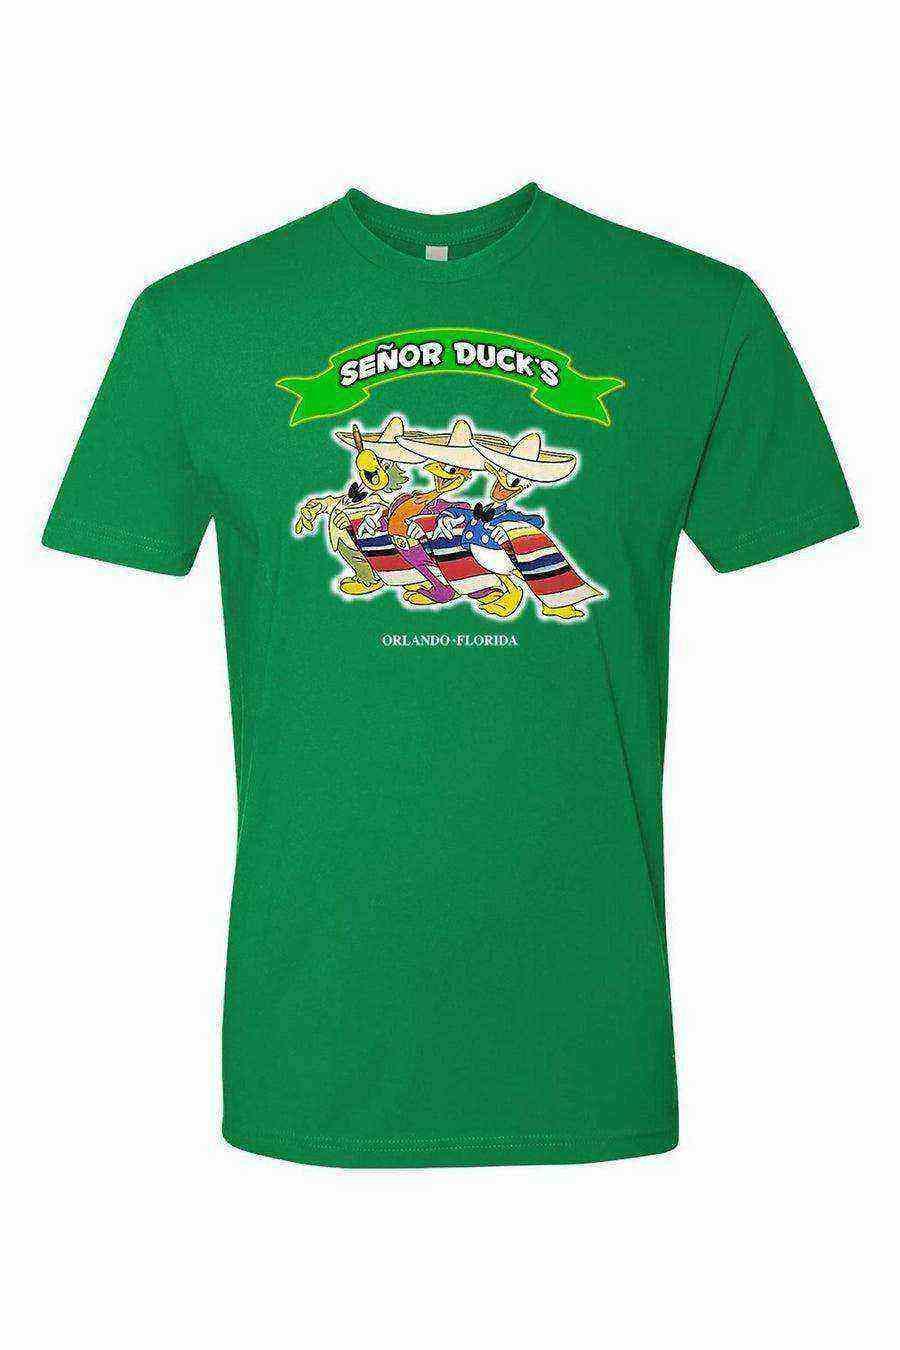 Señor Ducks Shirt | World Spring Break Shirt | Senor Frogs | The Three Caballeros Shirt - Dylan's Tees